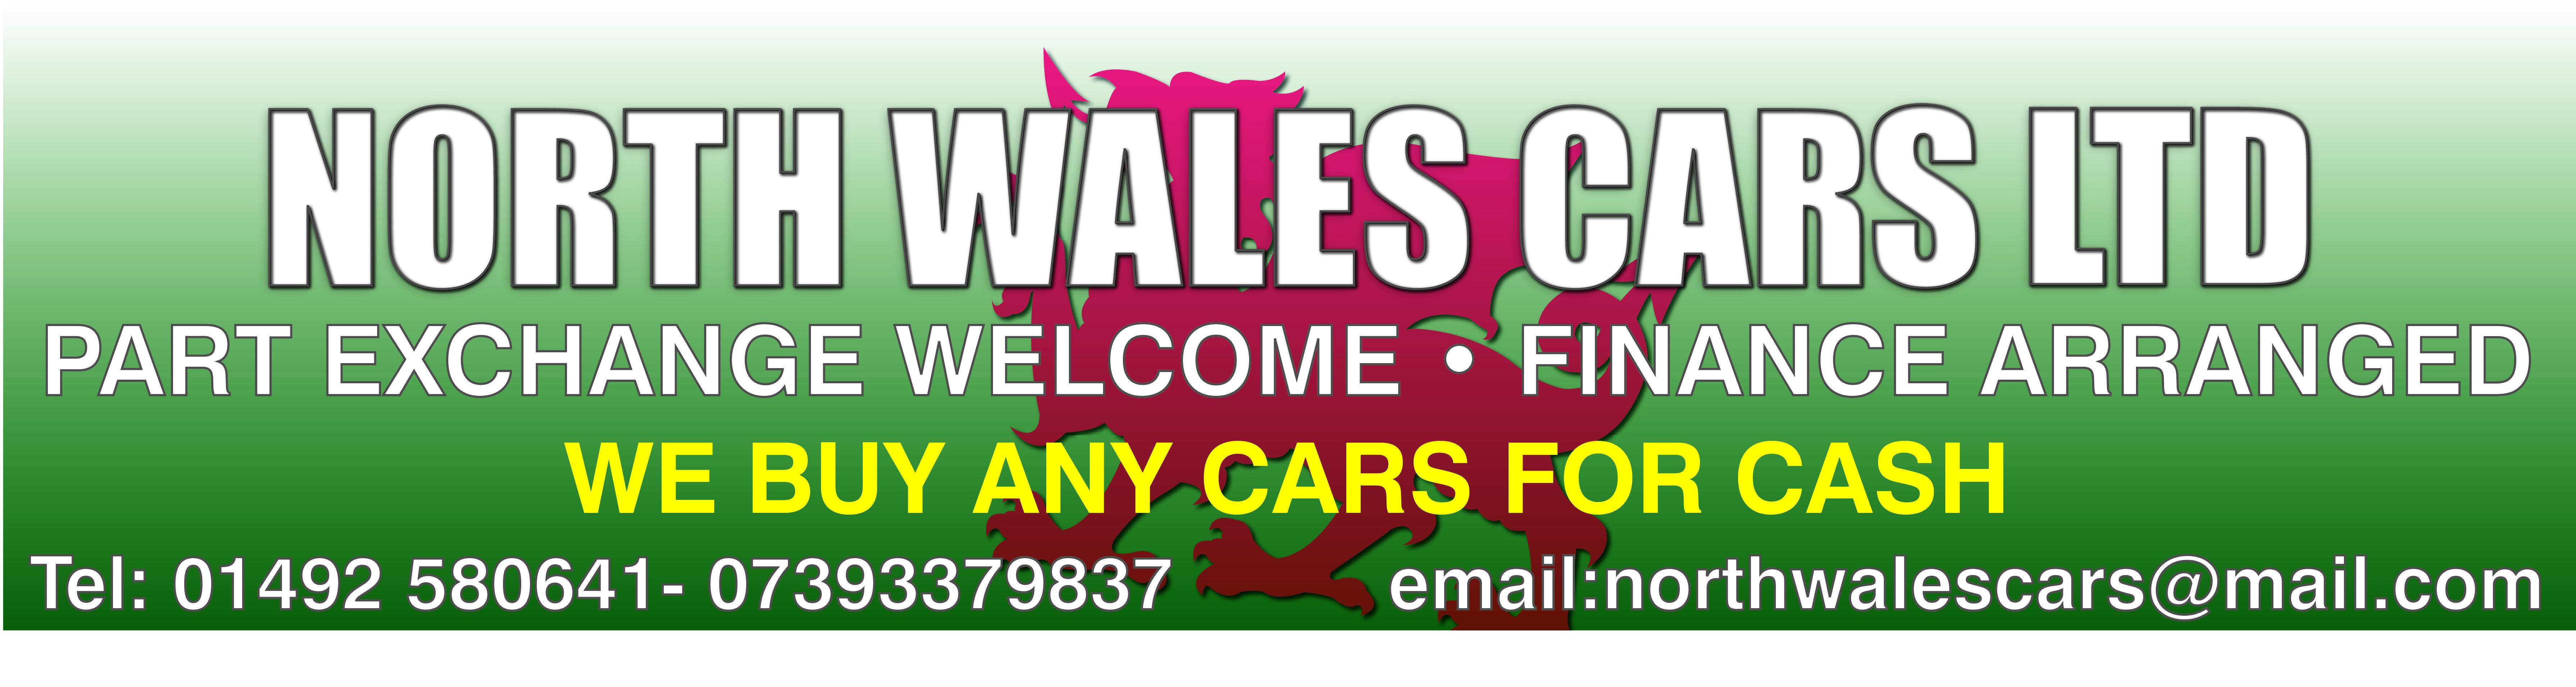 Warranties at North wales Cars Ltd